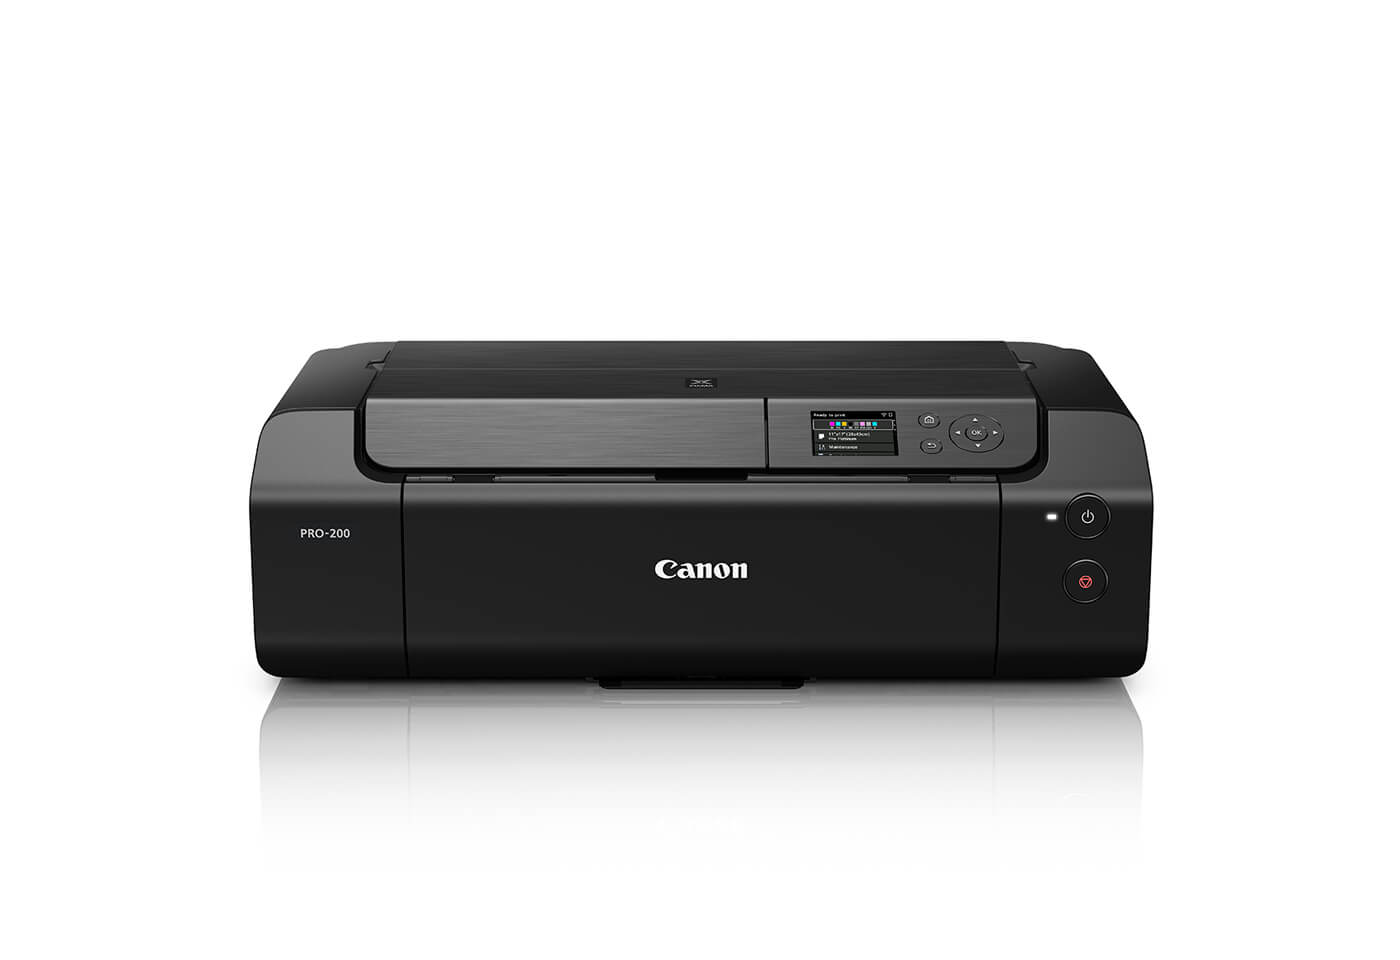 Product image of PIXMA PRO-200 printer